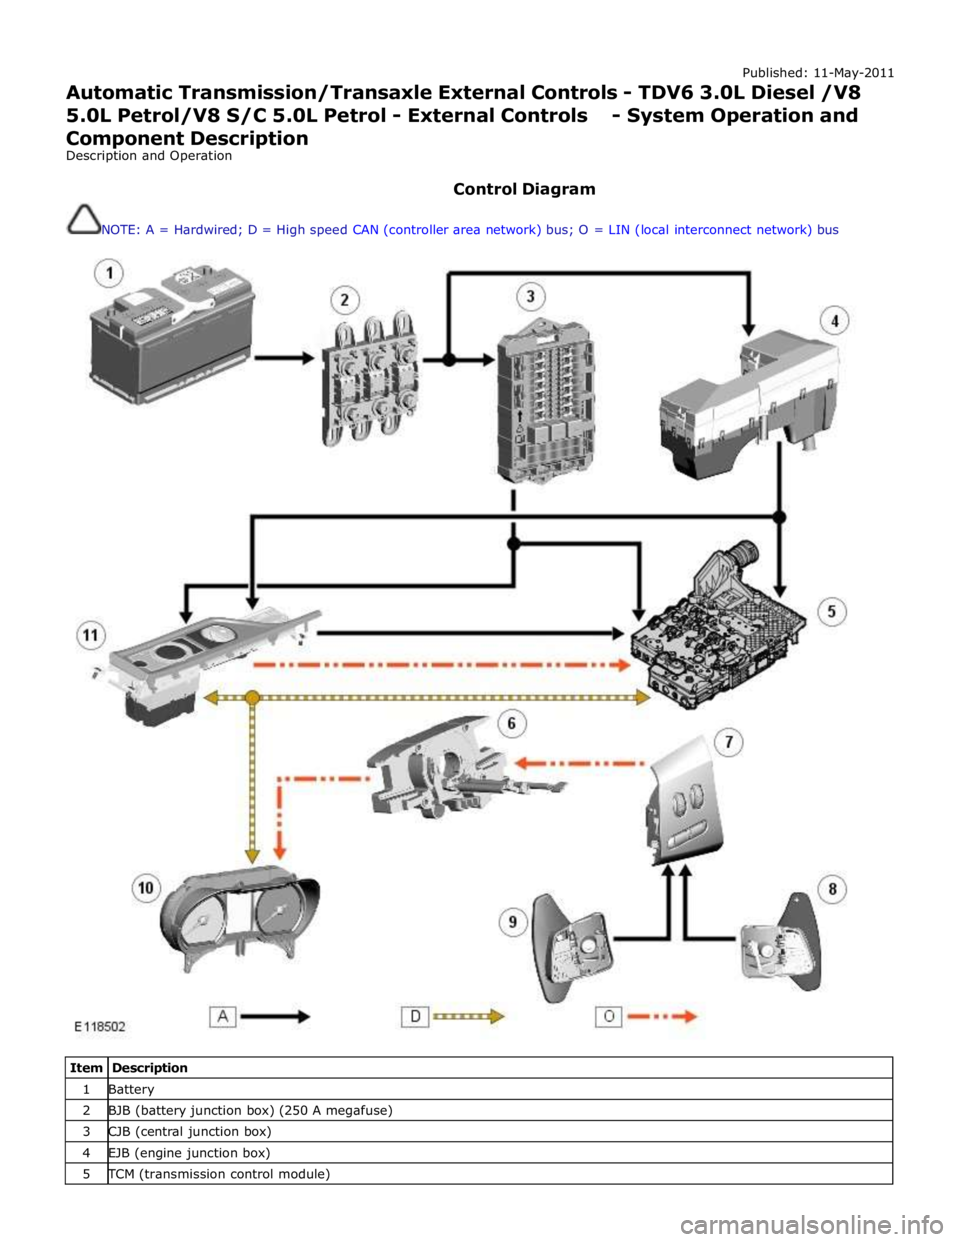 JAGUAR XFR 2010 1.G Workshop Manual Published: 11-May-2011 
Automatic Transmission/Transaxle External Controls - TDV6 3.0L Diesel /V8 5.0L Petrol/V8 S/C 5.0L Petrol - External Controls - System Operation and 
Component Description 
Desc